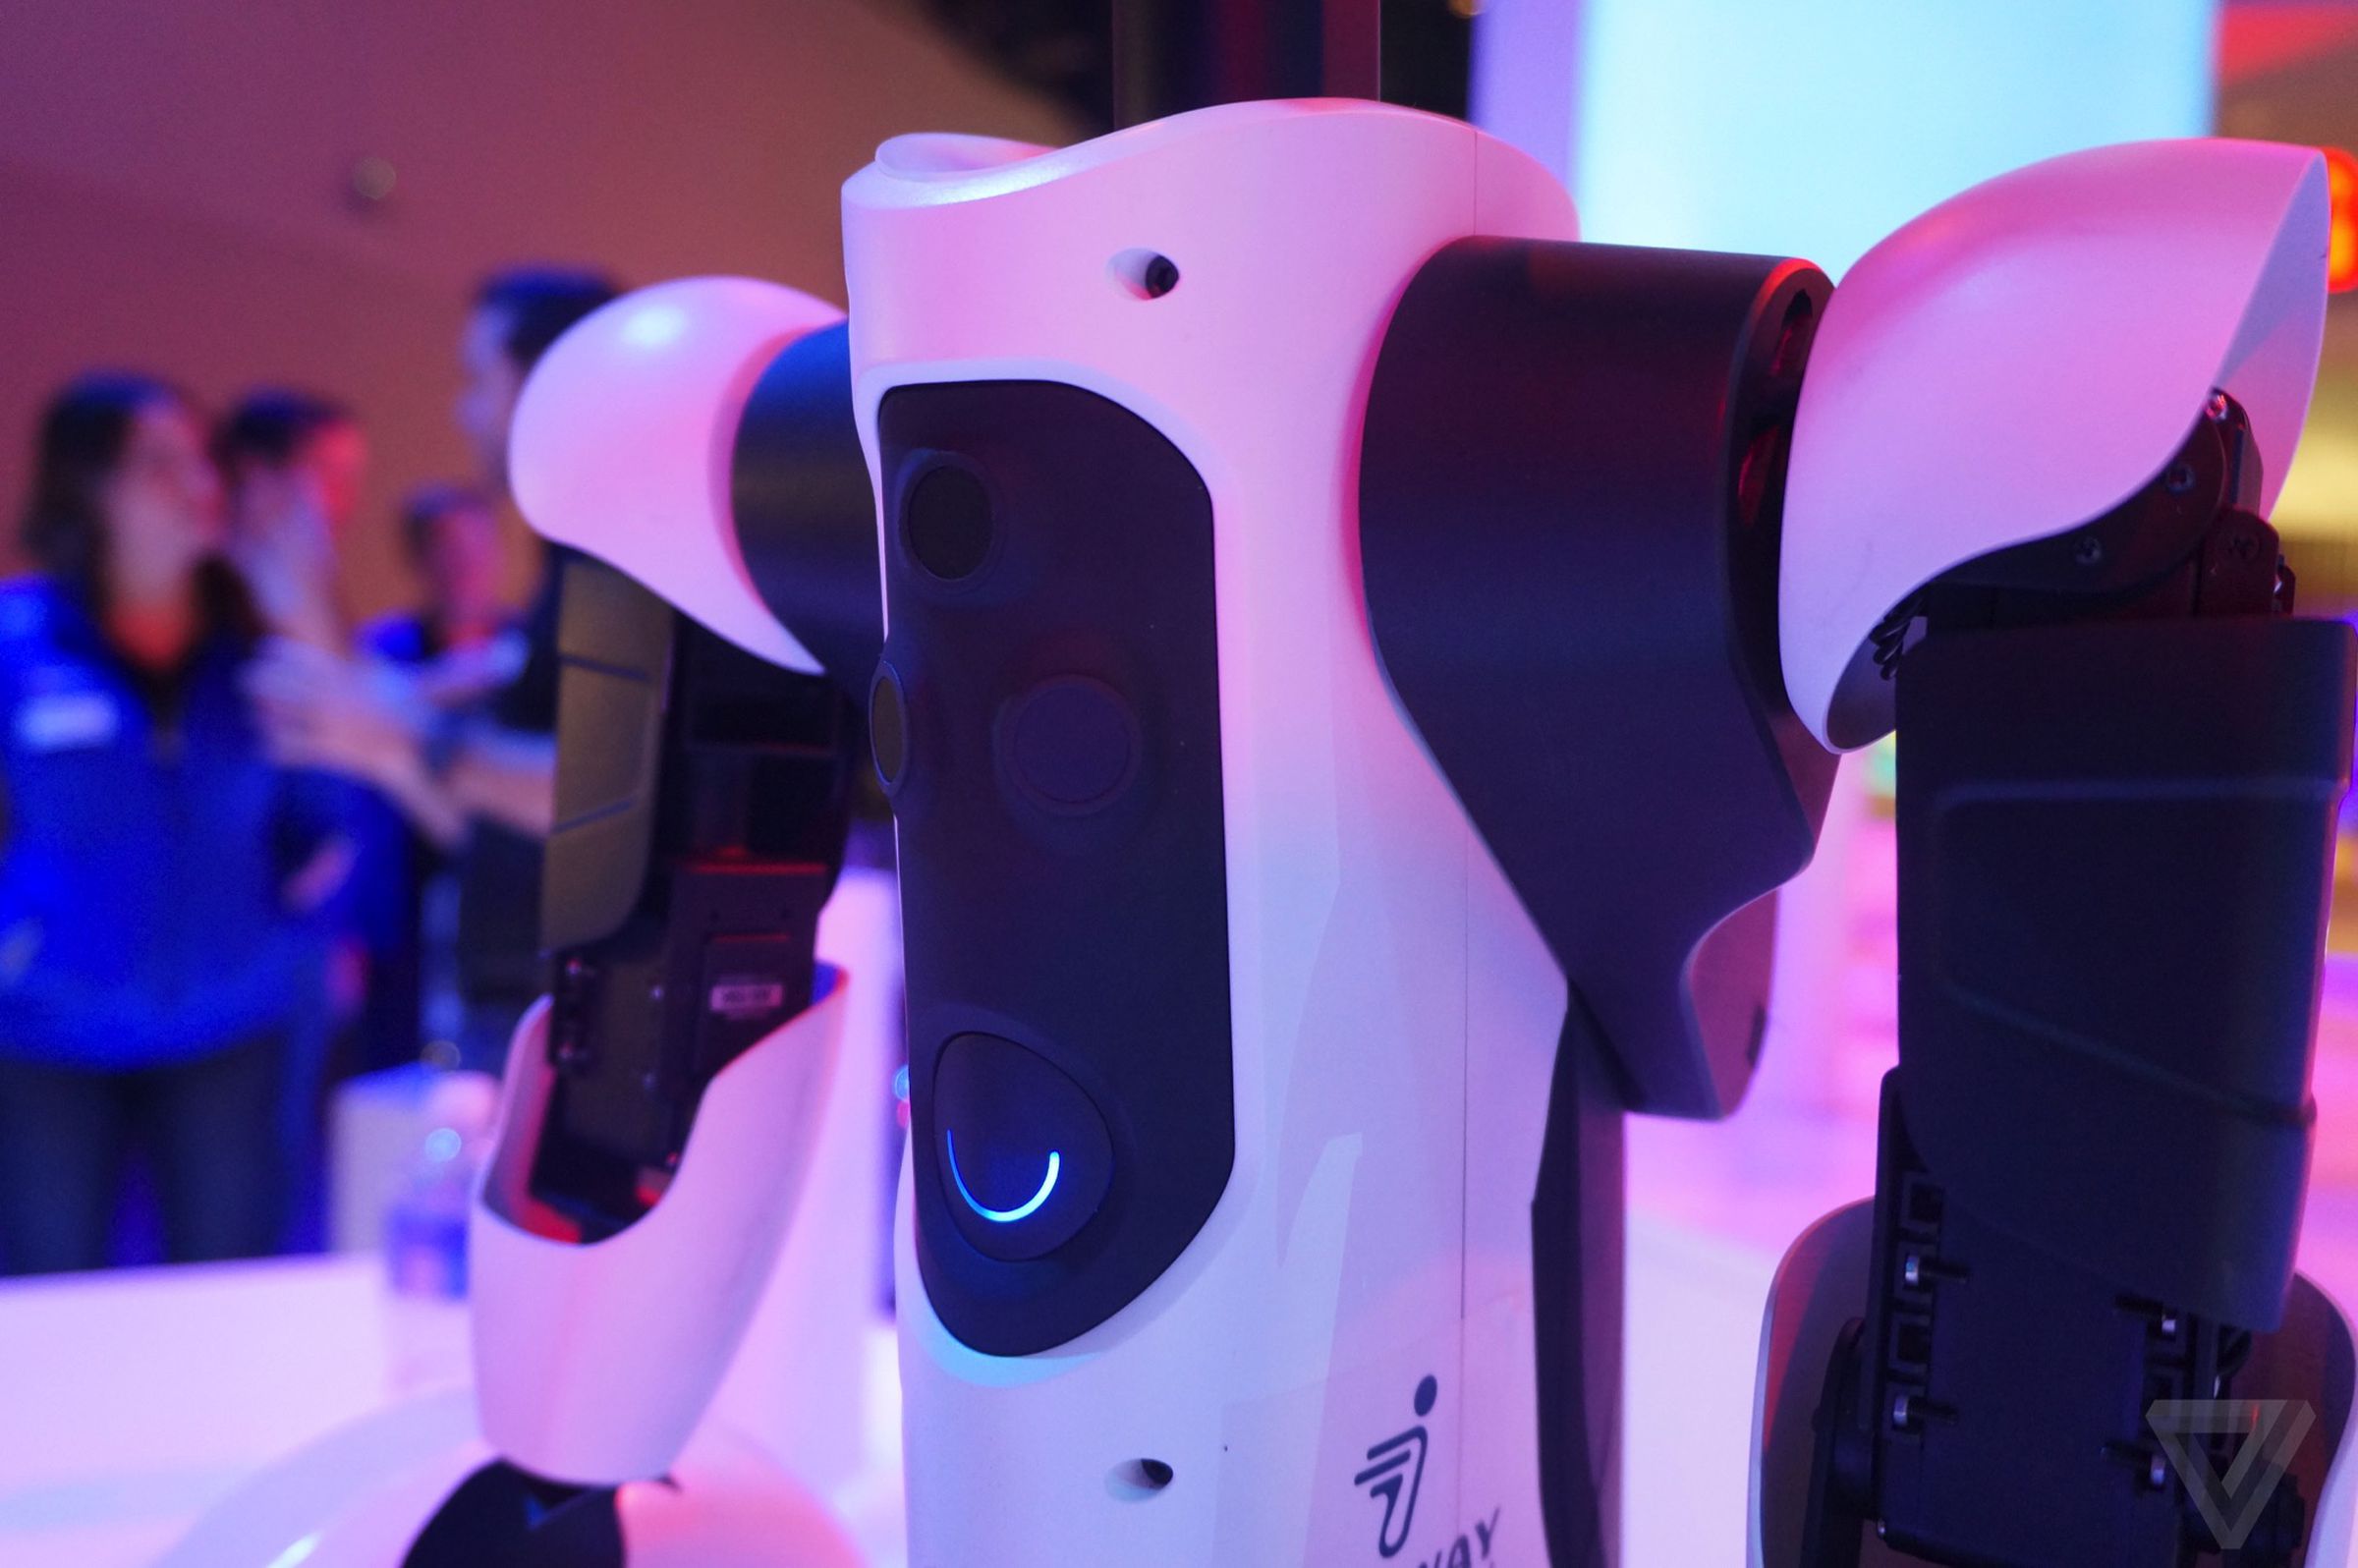 Segway Robot Butler hands-on photos